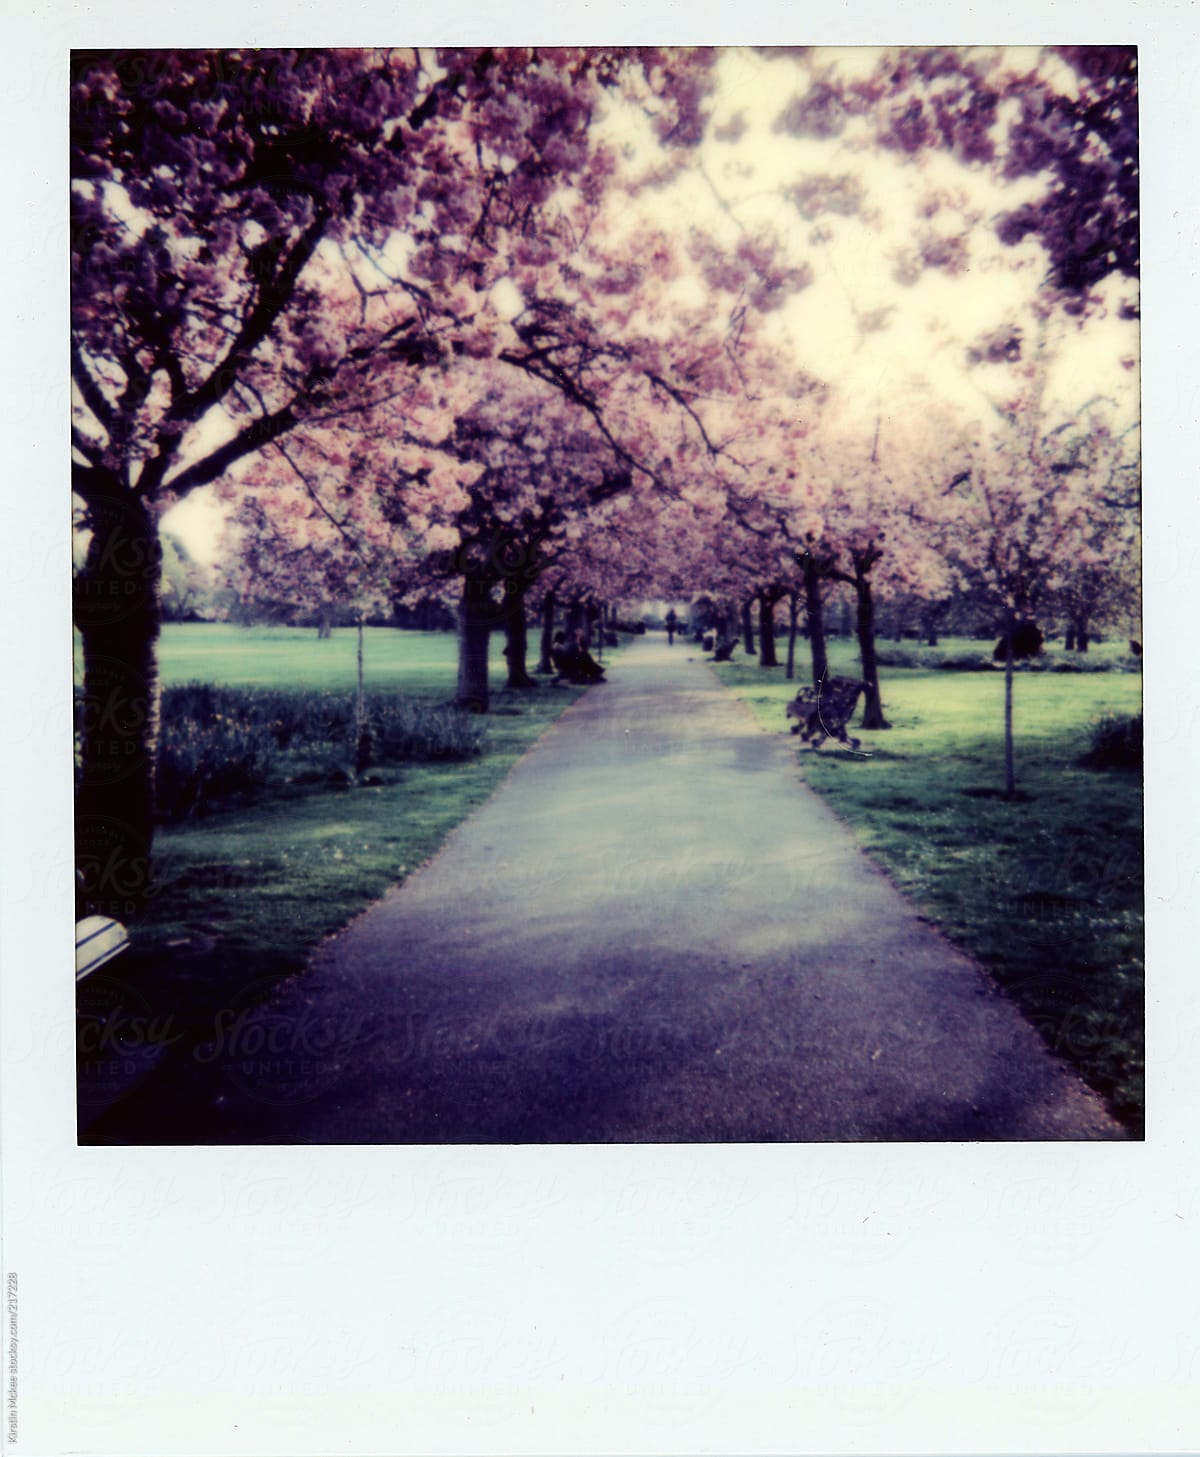 Cherry blossom on polaroid